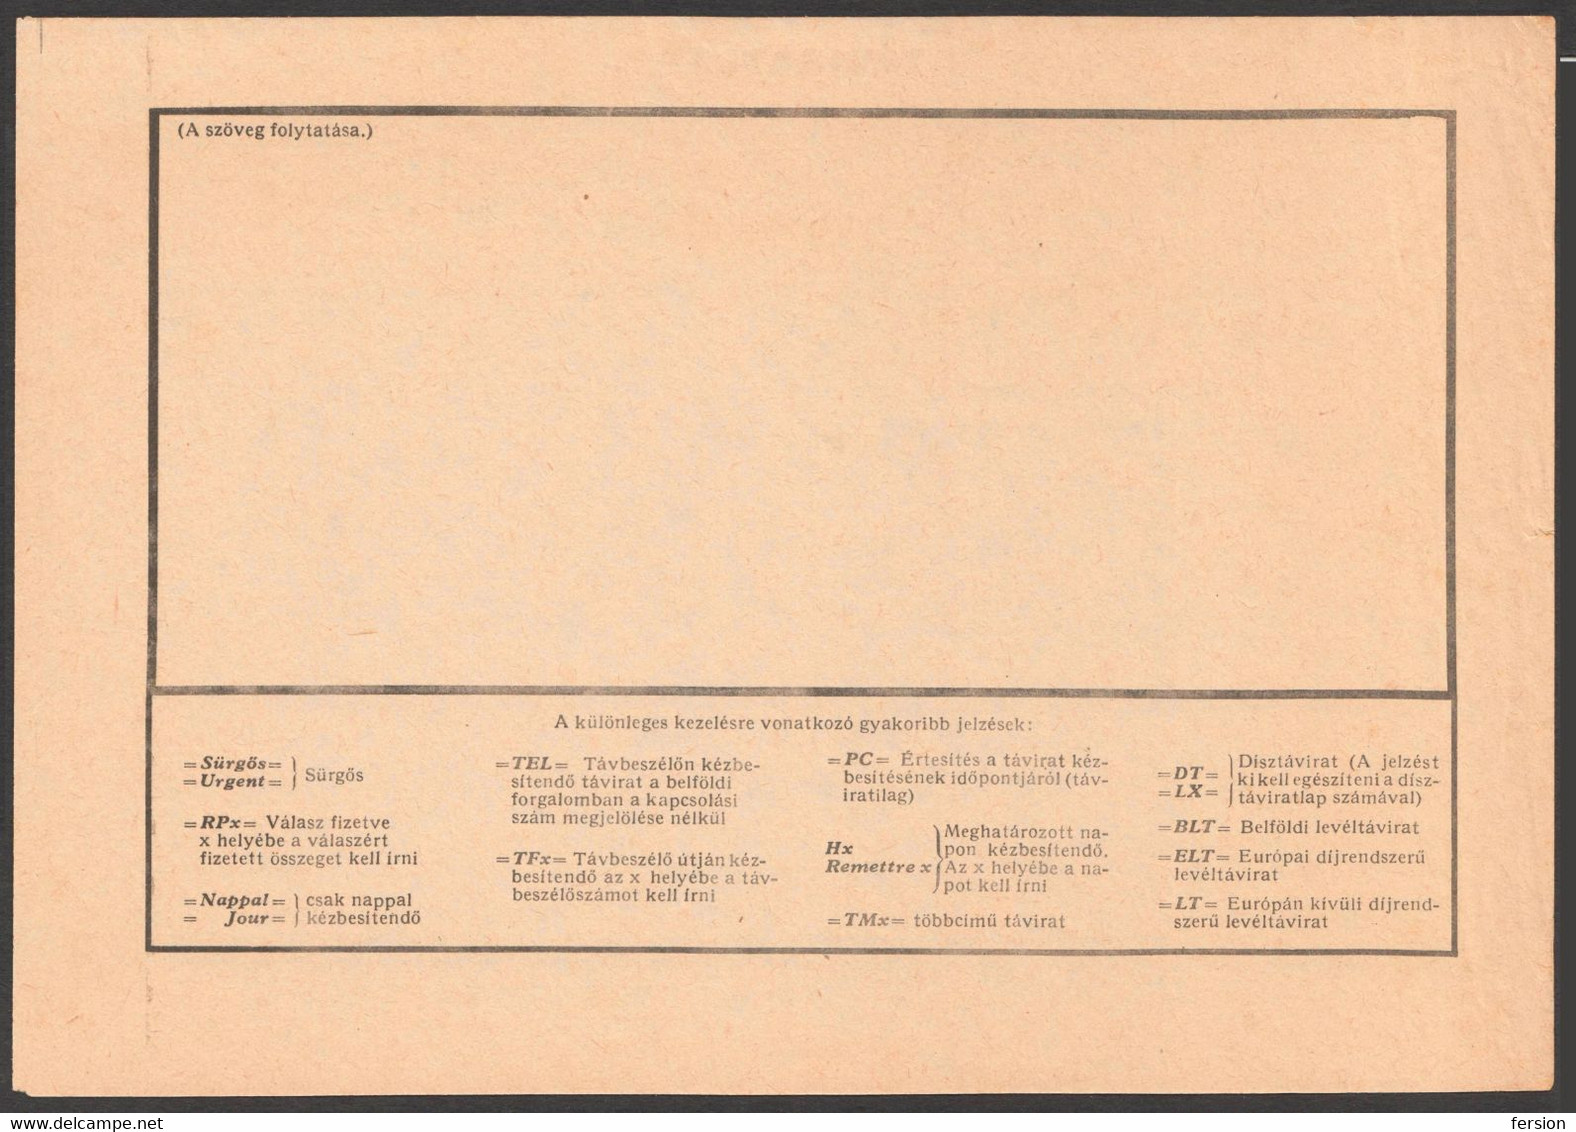 1960 Hungary TELEGRAPH TELEGRAM Blank Form - Stamped Stationery - Telegraph